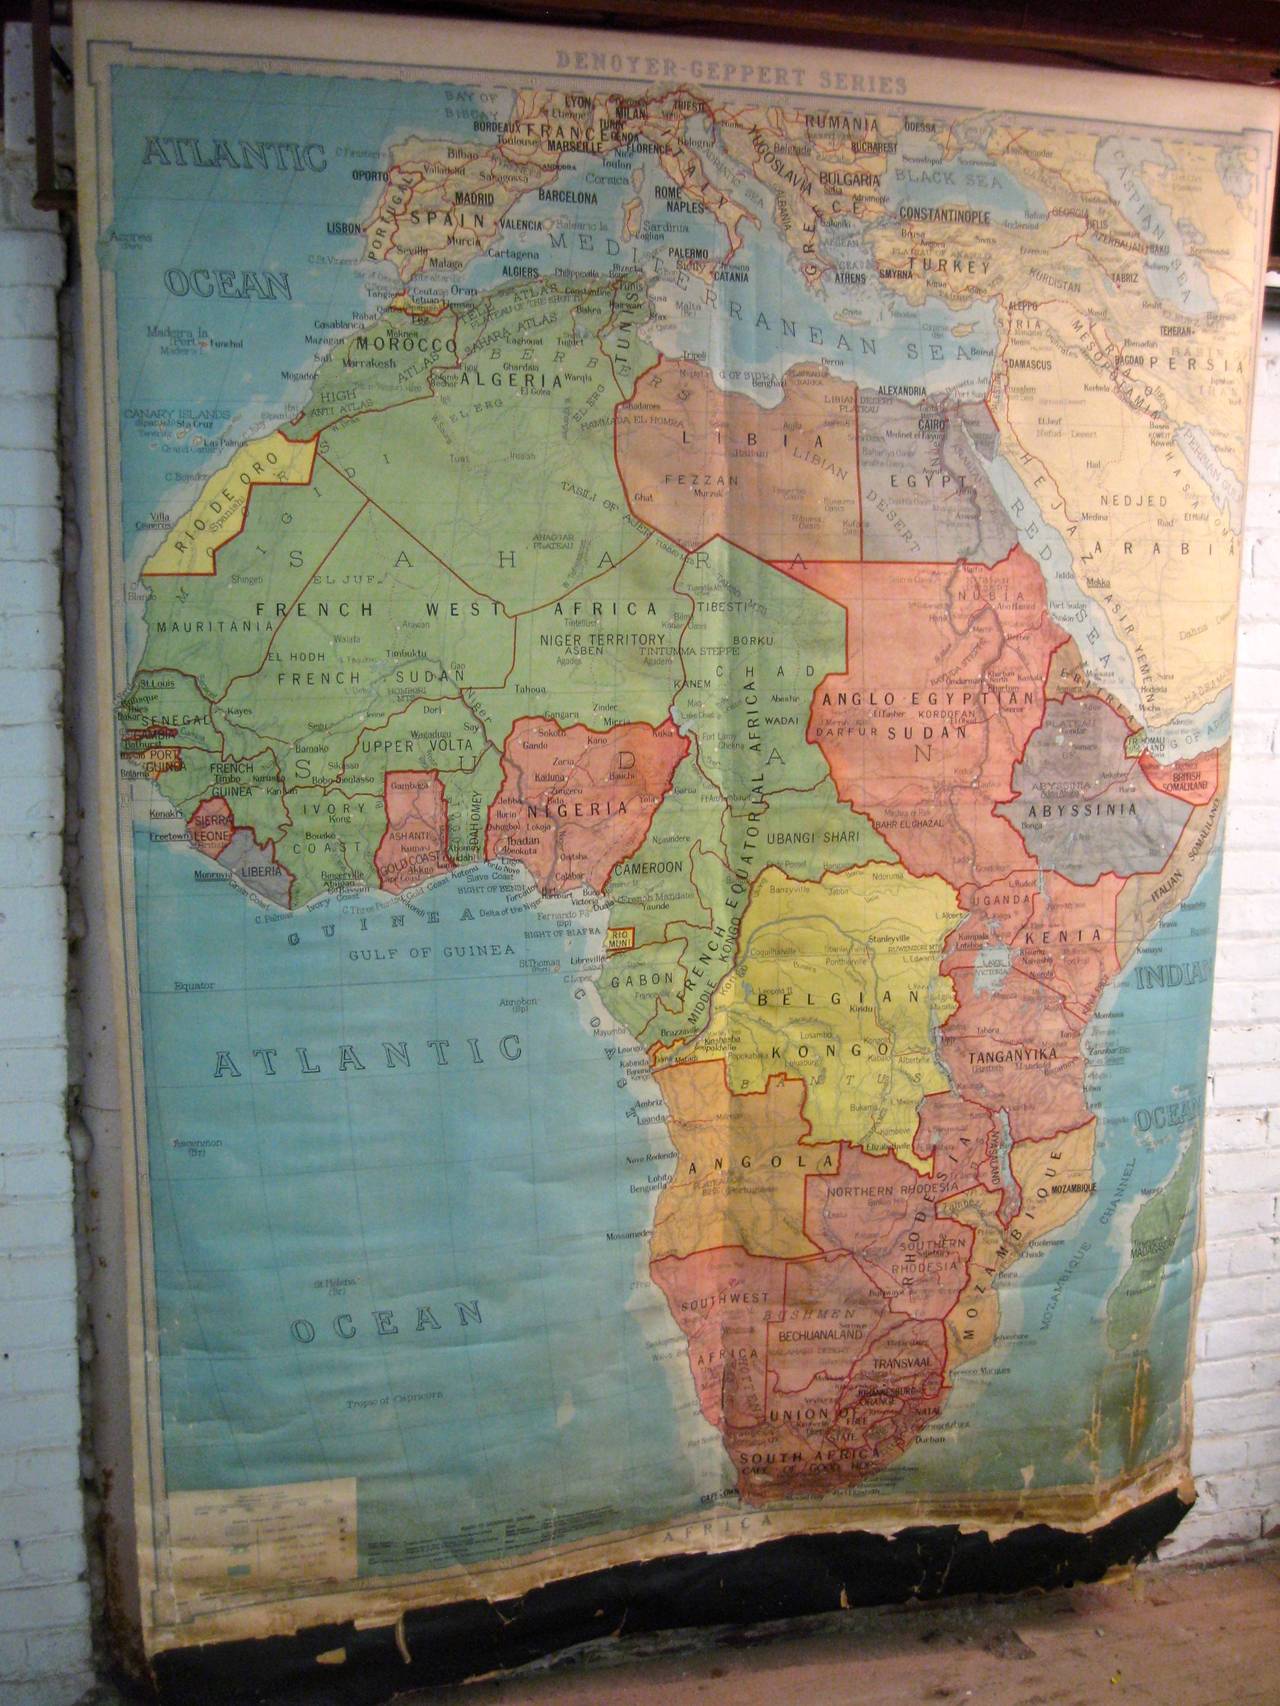 American 1923 Denoyer-Geppert School House Map of Africa